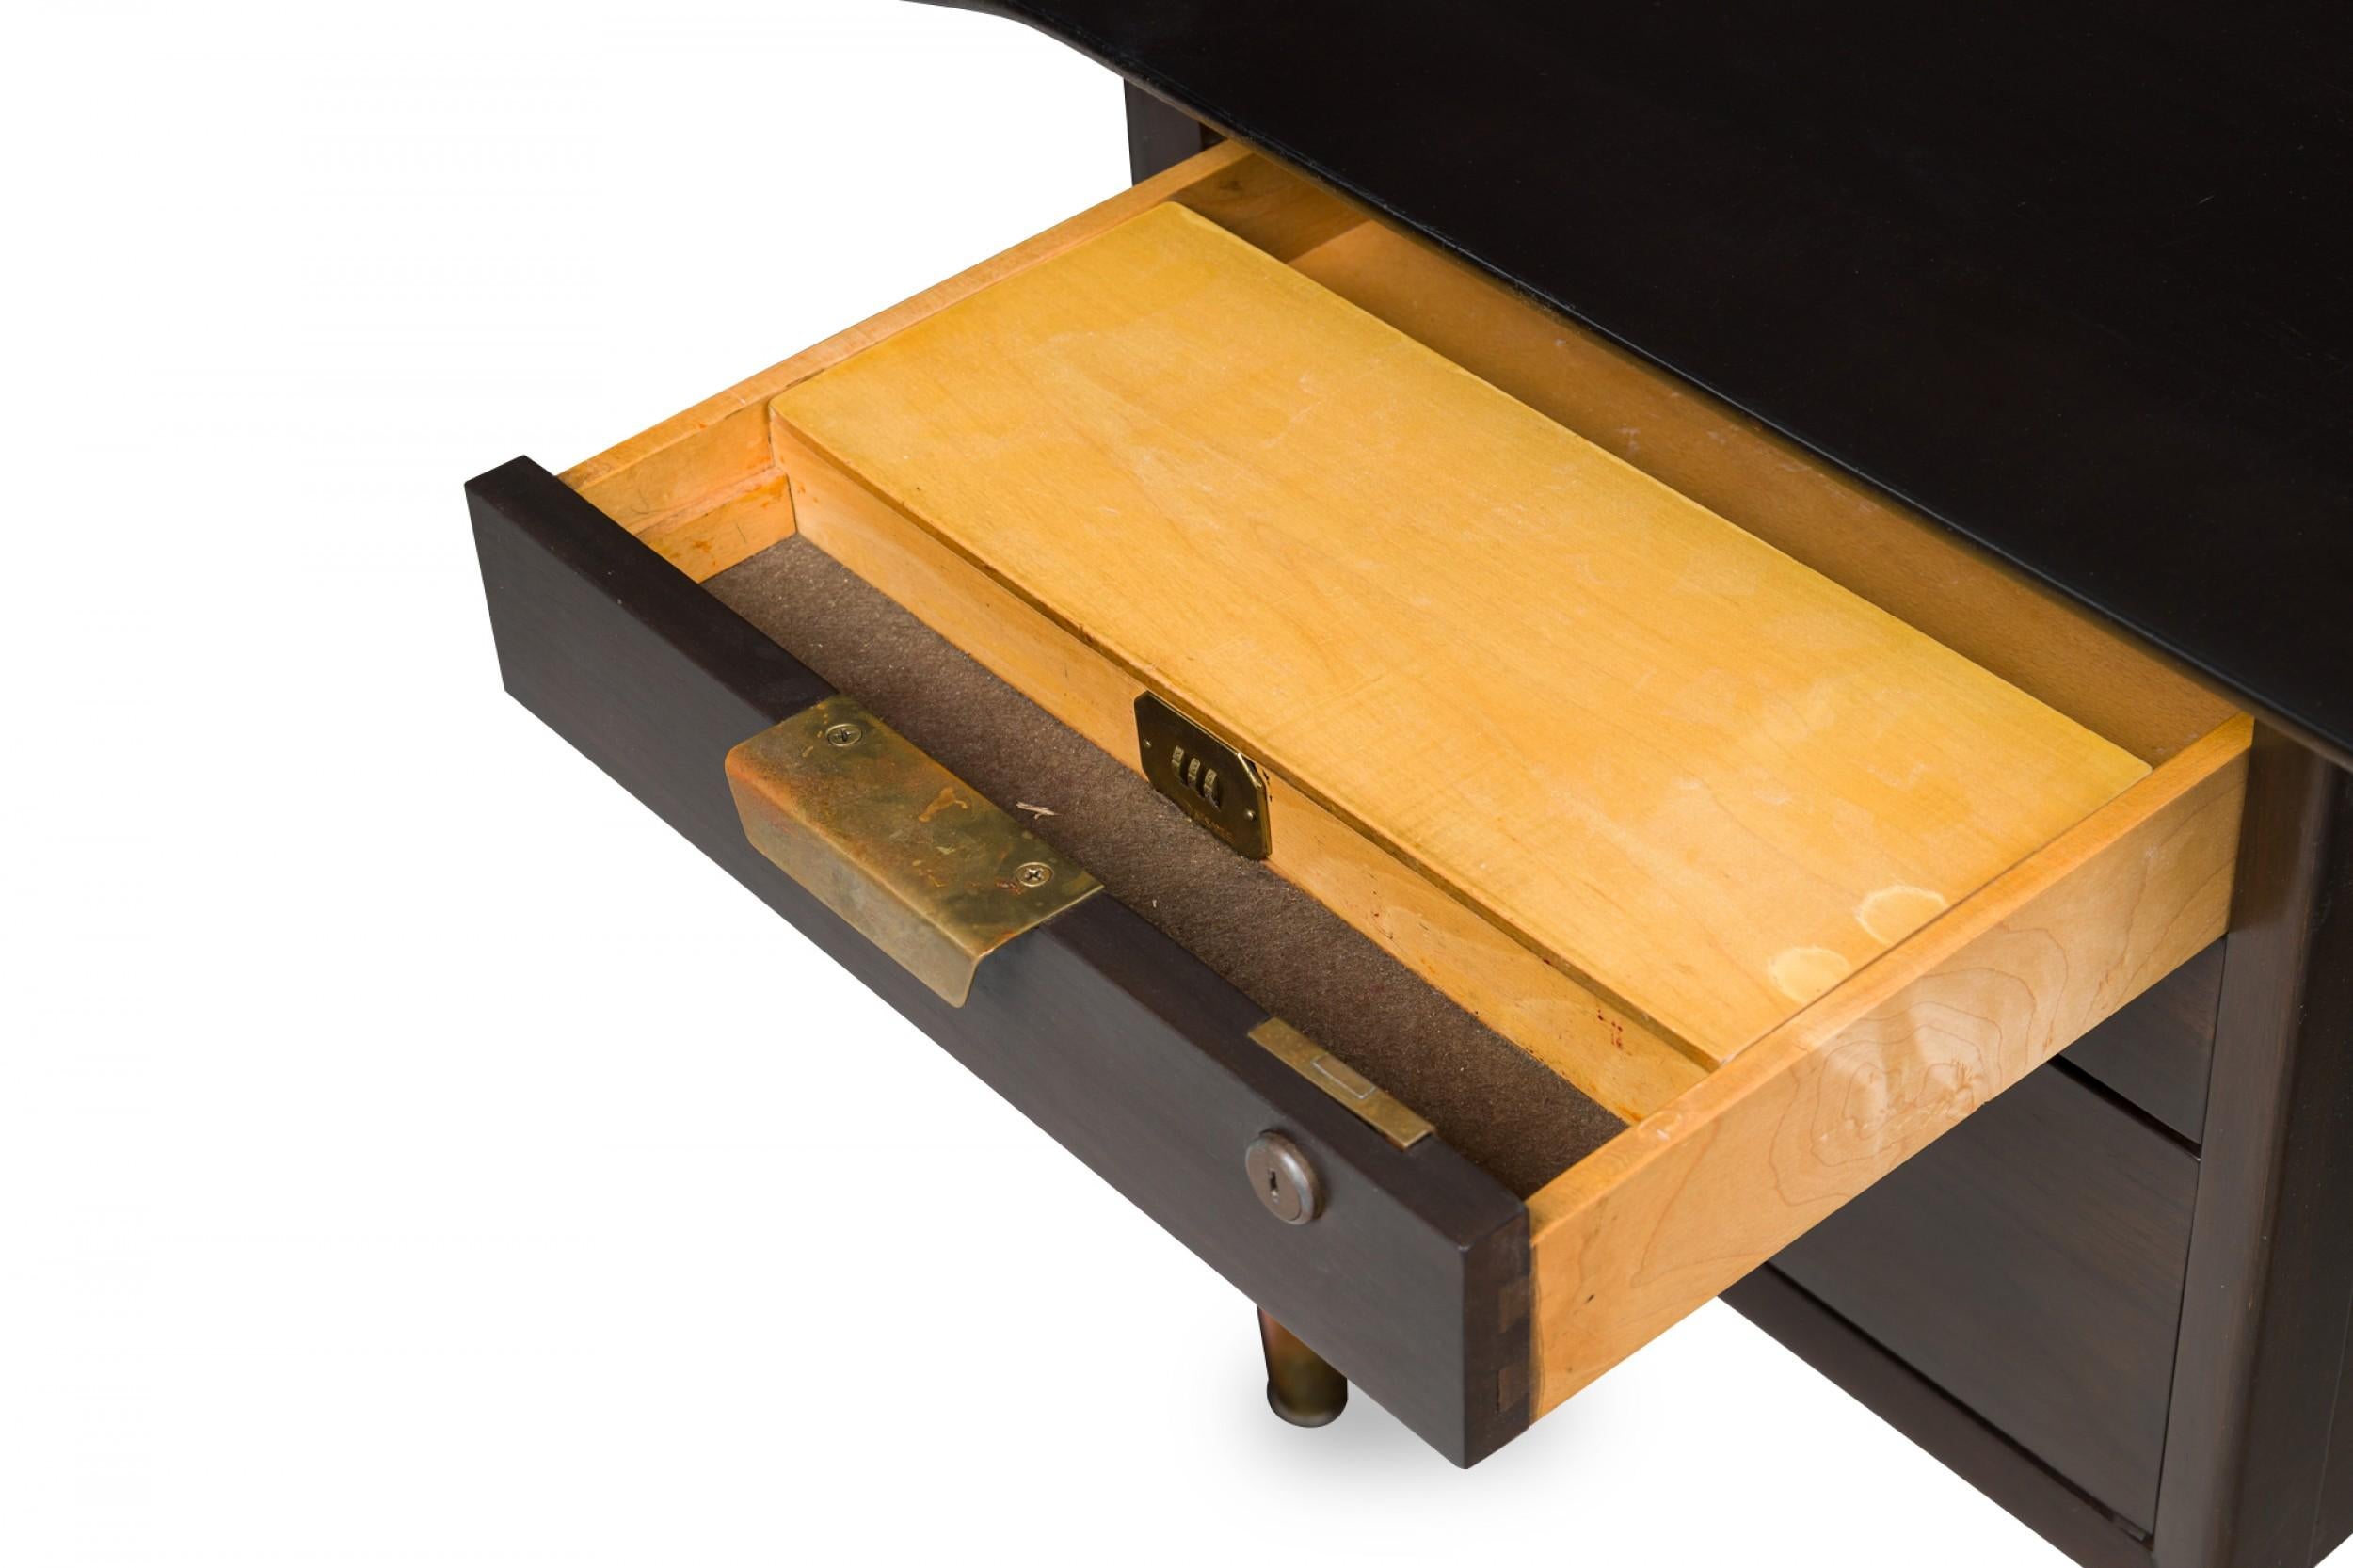 Standard Furniture Co. American Dark Wood Veneer & Brass Executive Desk For Sale 5